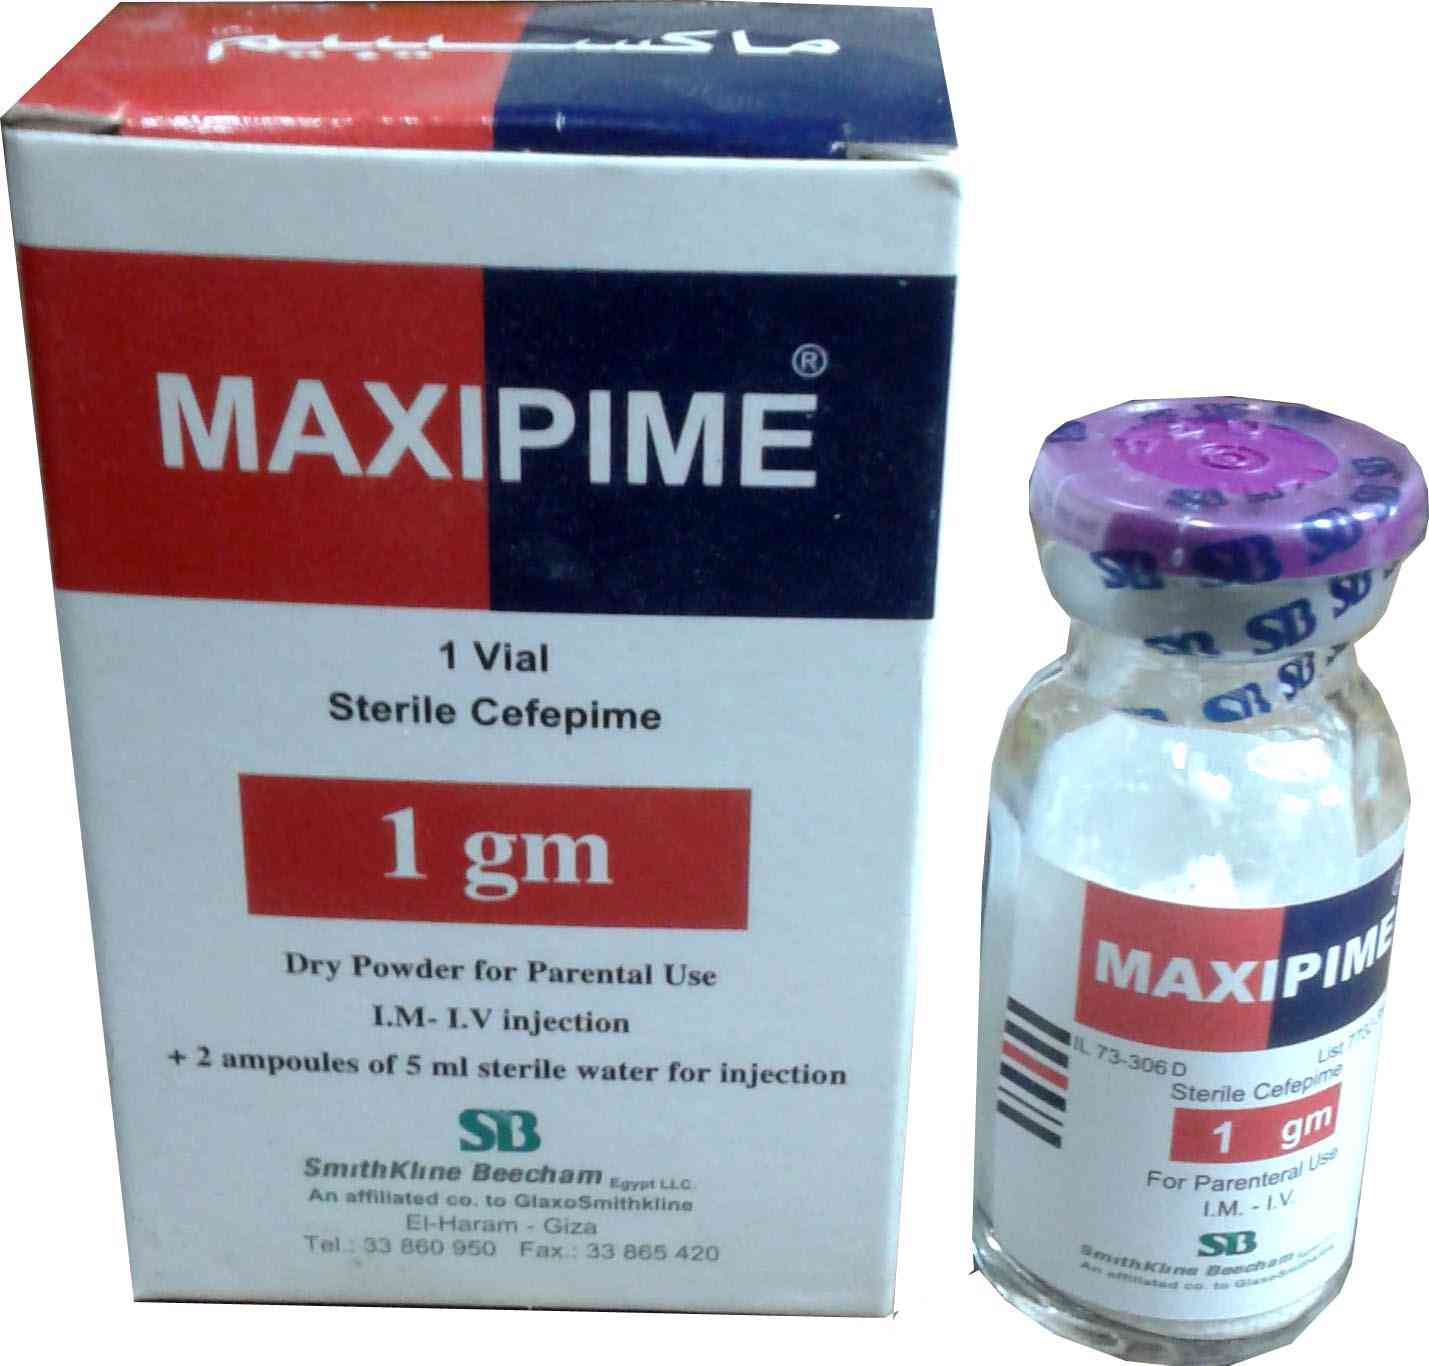 Maxipime 1 gm vial